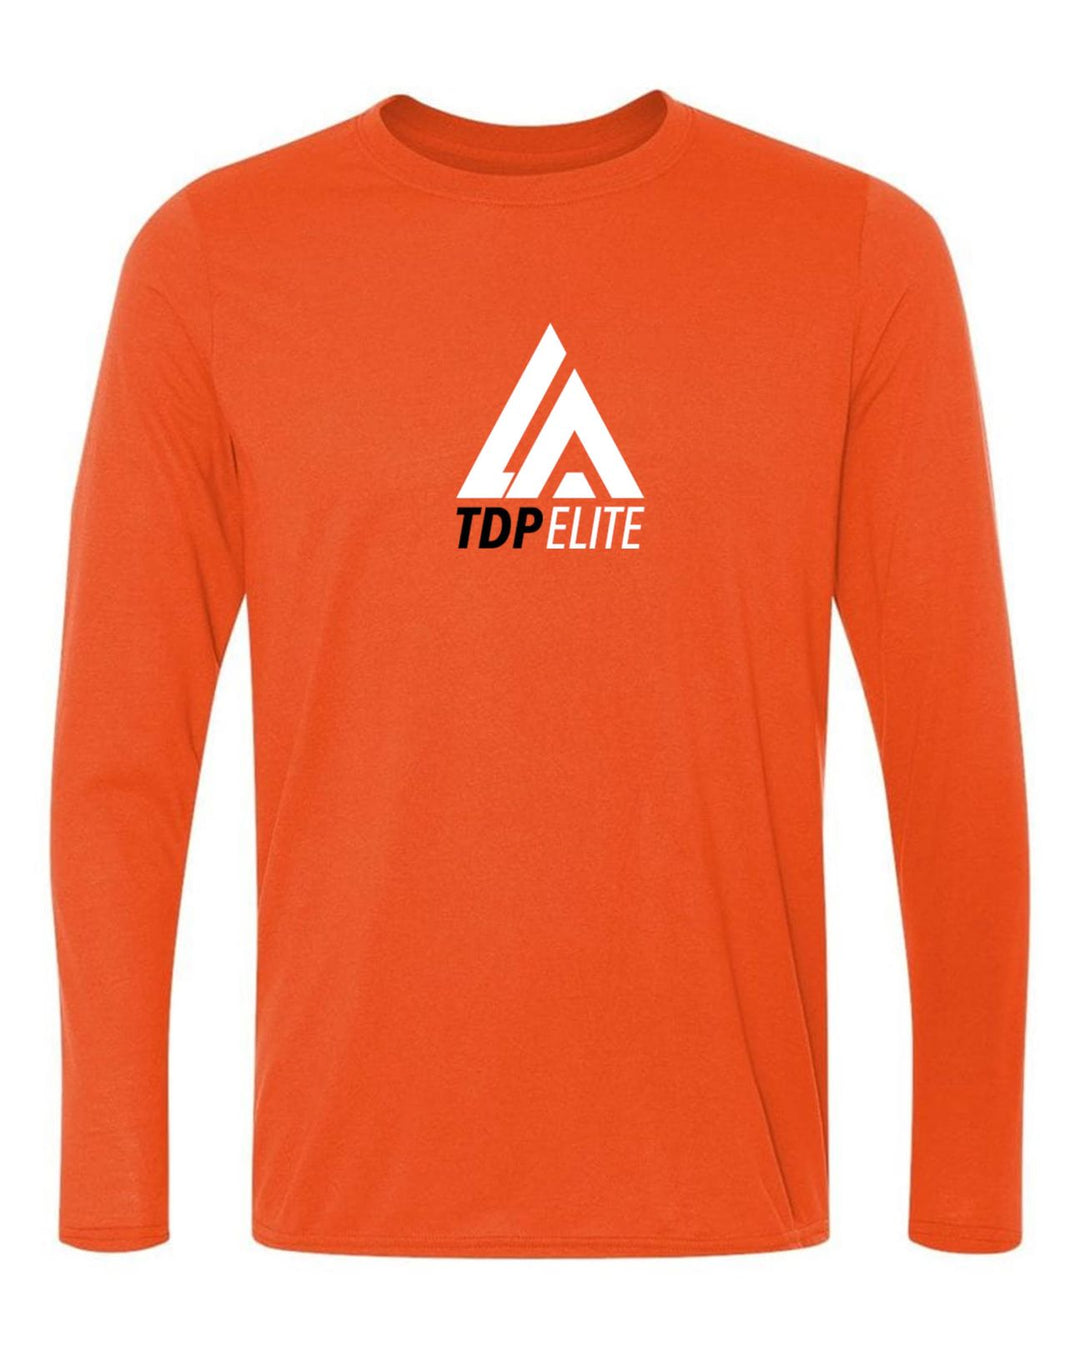 LATDP Elite Long-Sleeve T-Shirt LATDP Spiritwear ORANGE YOUTH LARGE - Third Coast Soccer